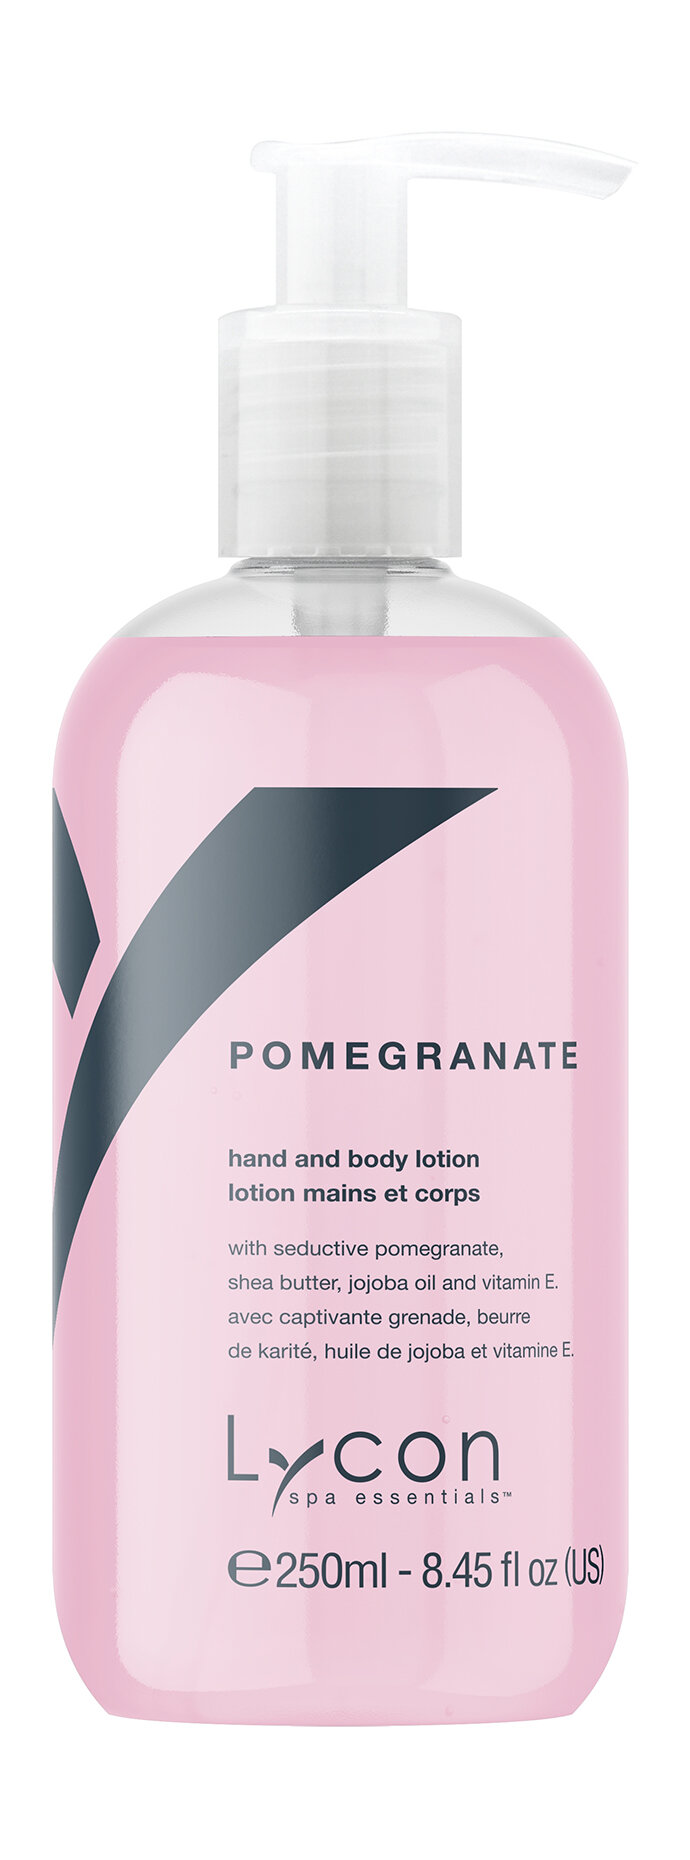 LYCON Лосьон для рук и тела Pomegranate Hand & Body Lotion гранат, 250 мл